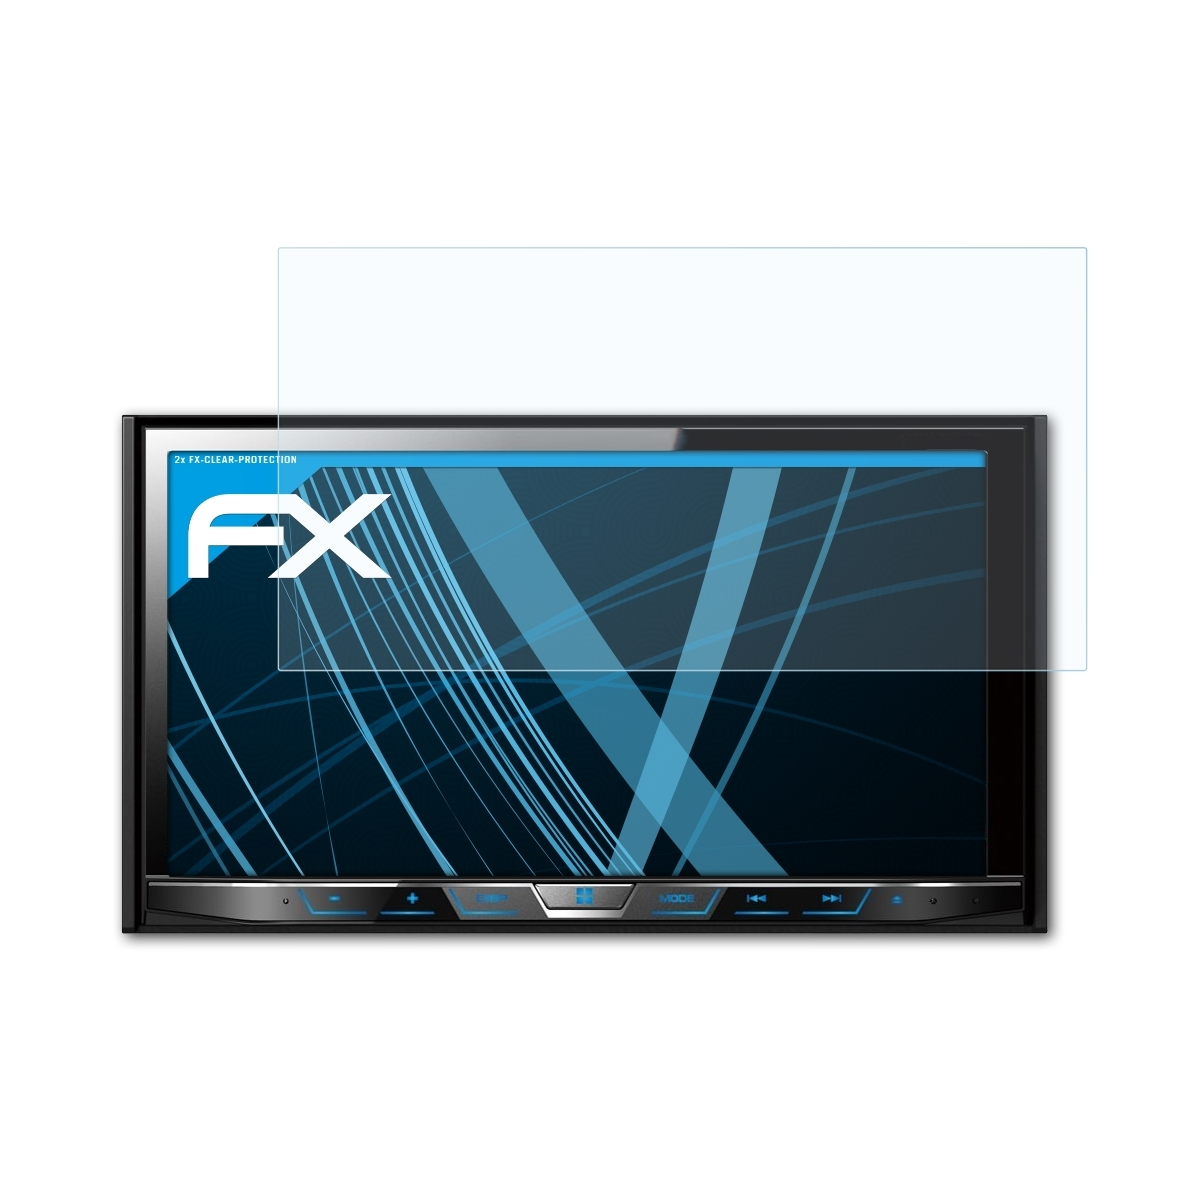 ATFOLIX 2x FX-Clear Displayschutz(für Pioneer / AVH-X5700DAB X5800DAB)